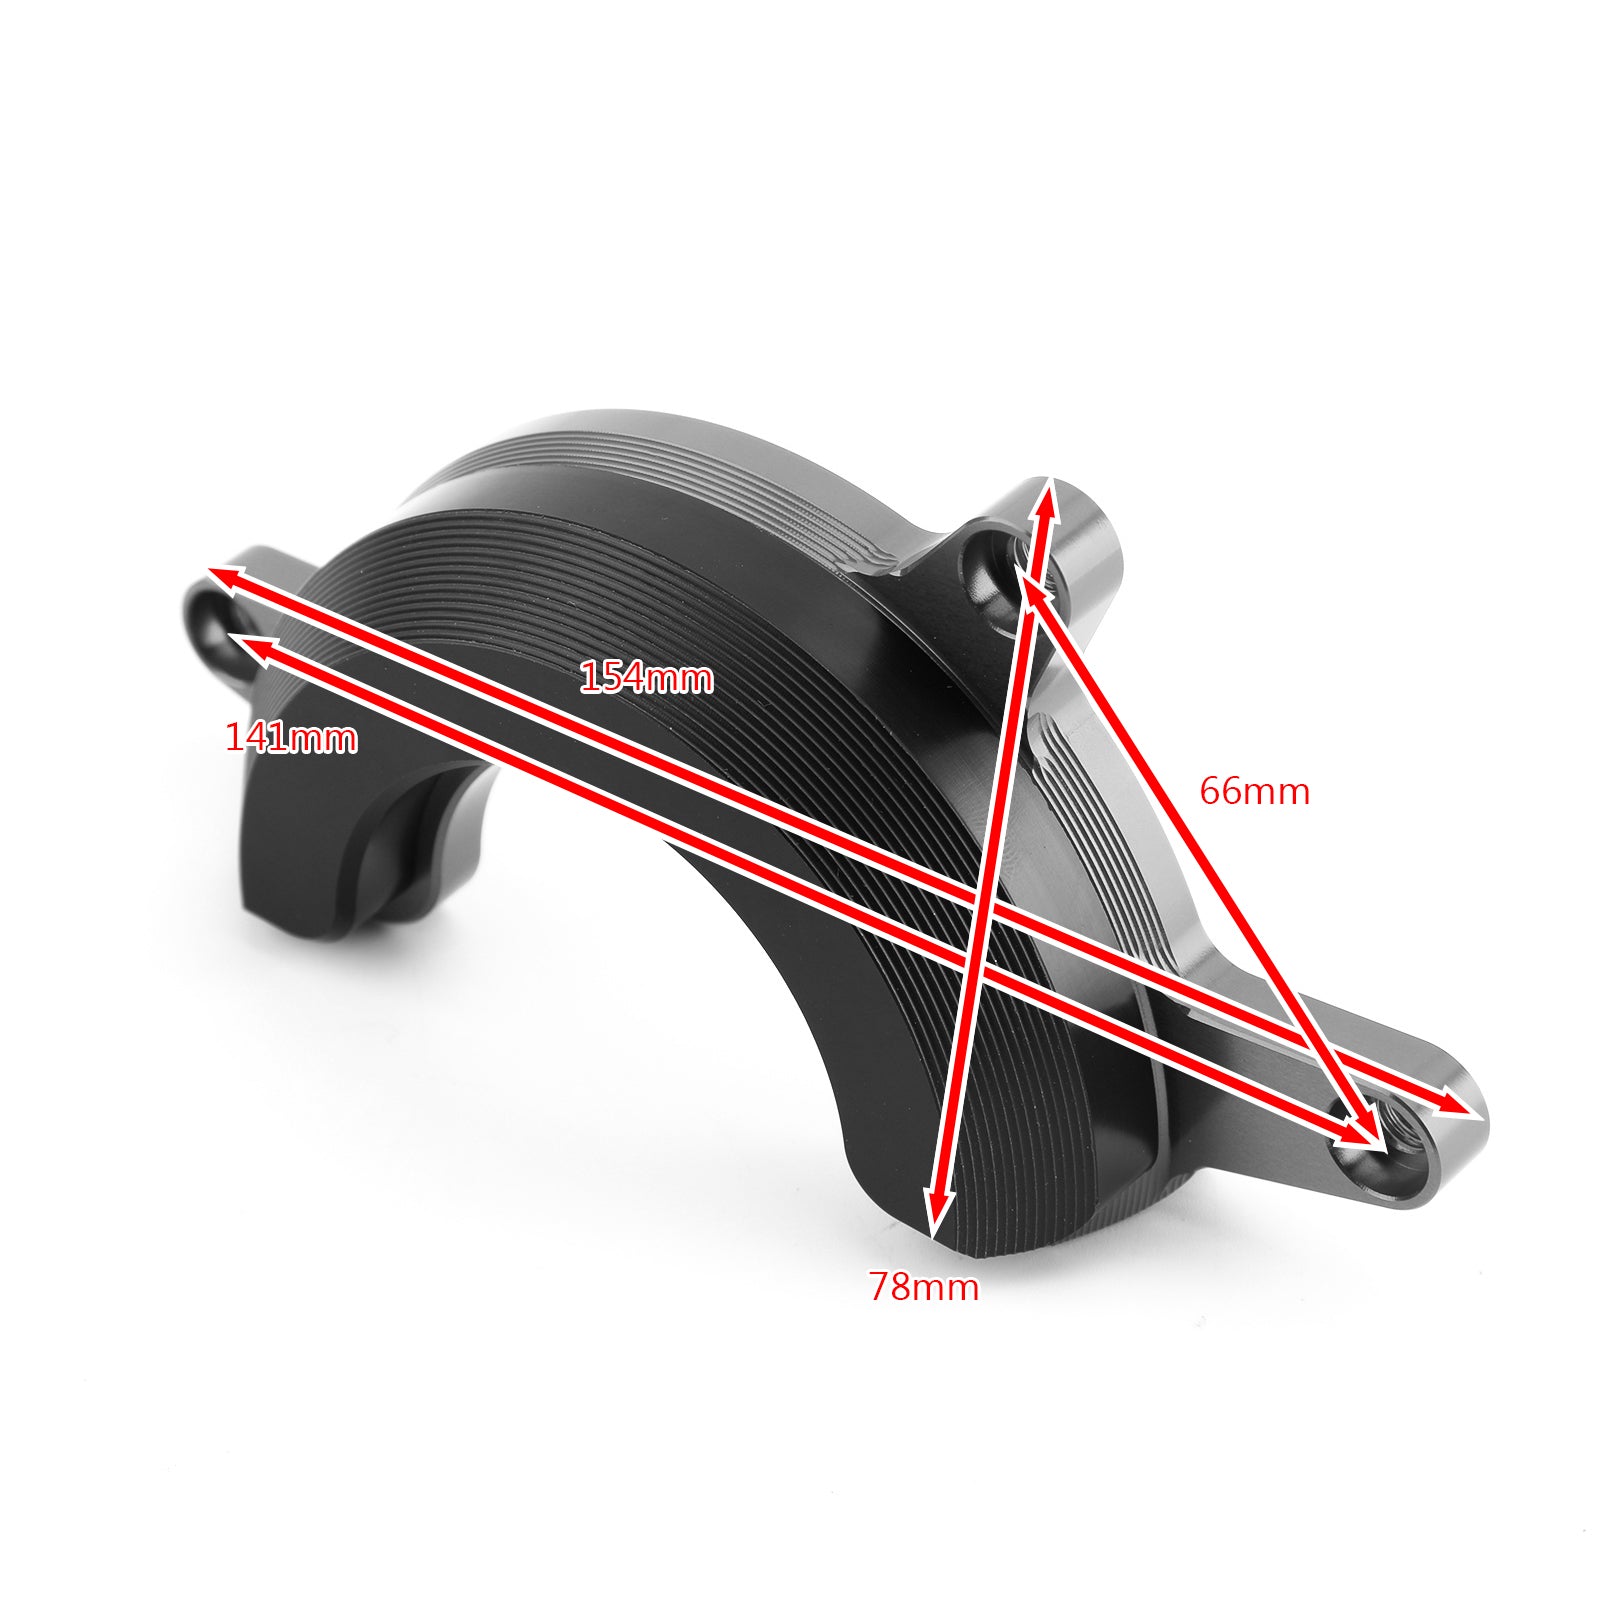 Honda Right Engine Stator Slider Frame Crash Pad Protector Fit For Honda CB650R 2019-2021 Black